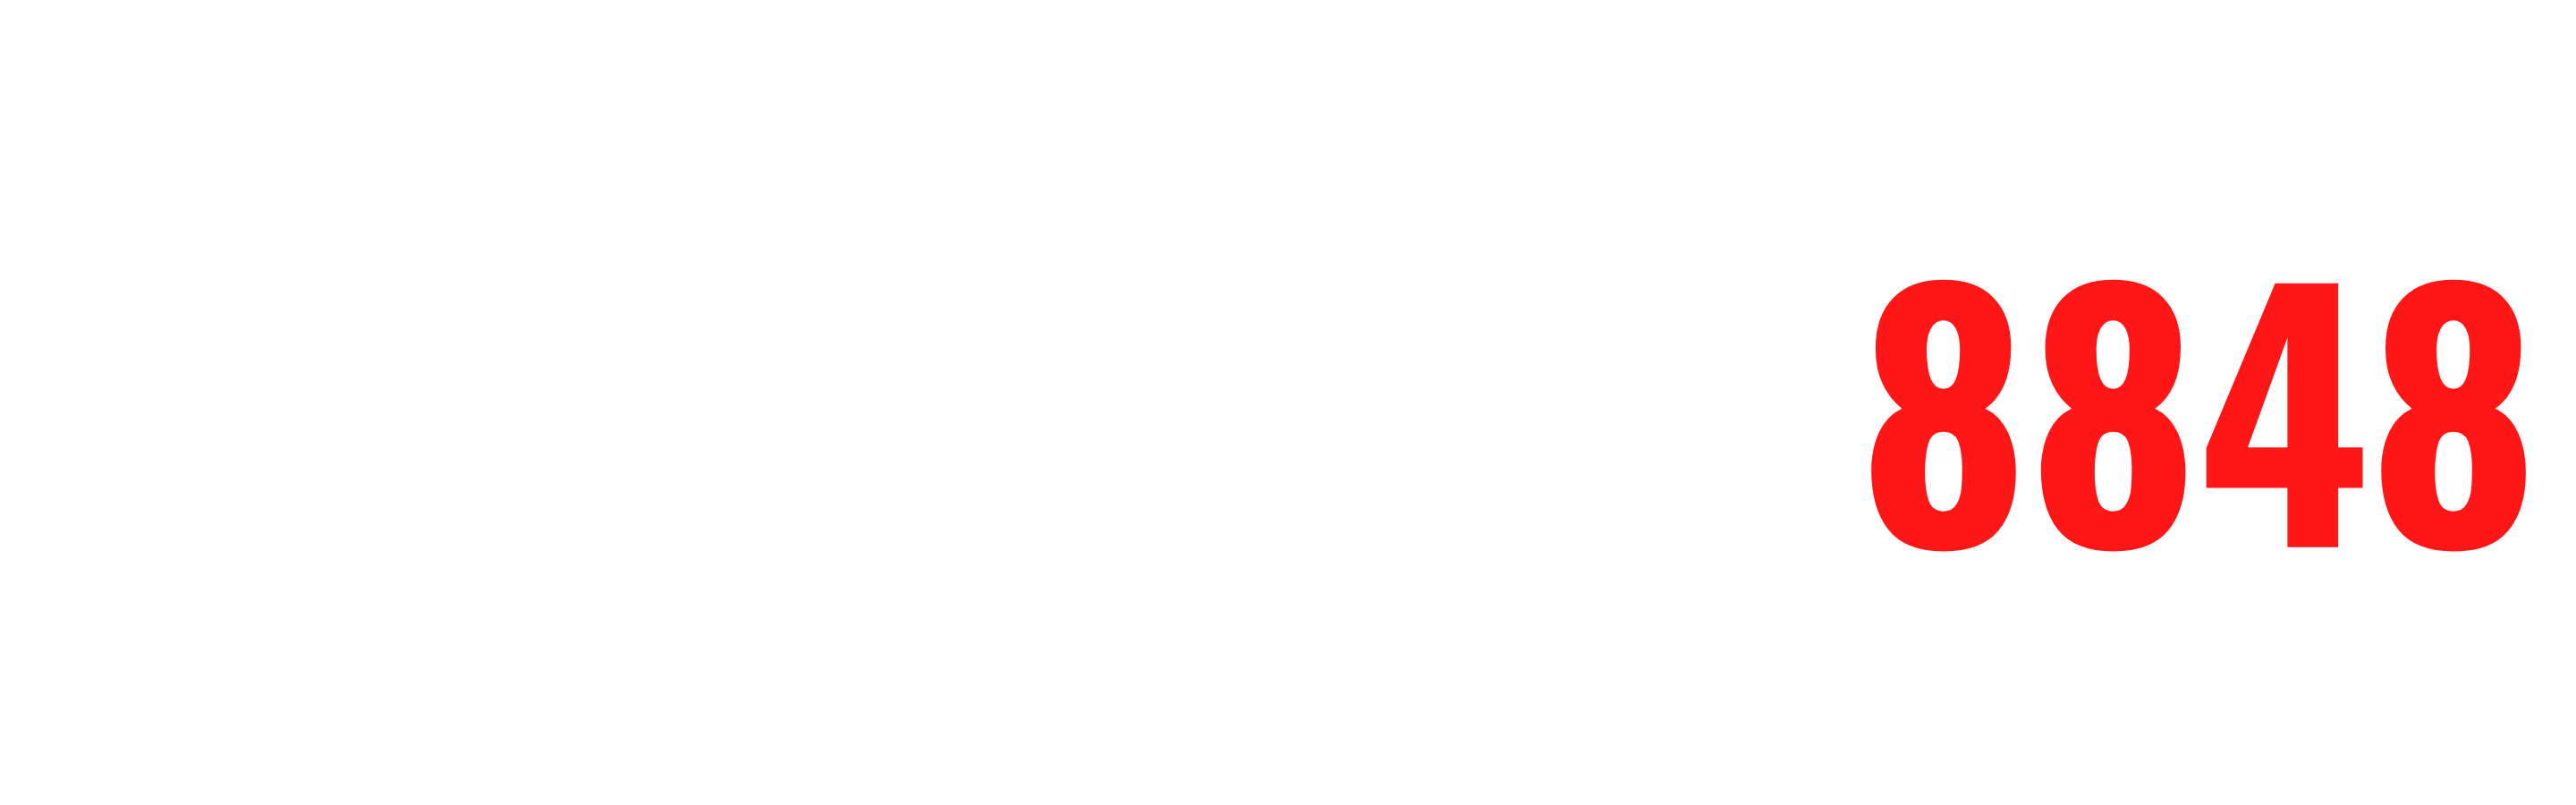 Freedom 8848